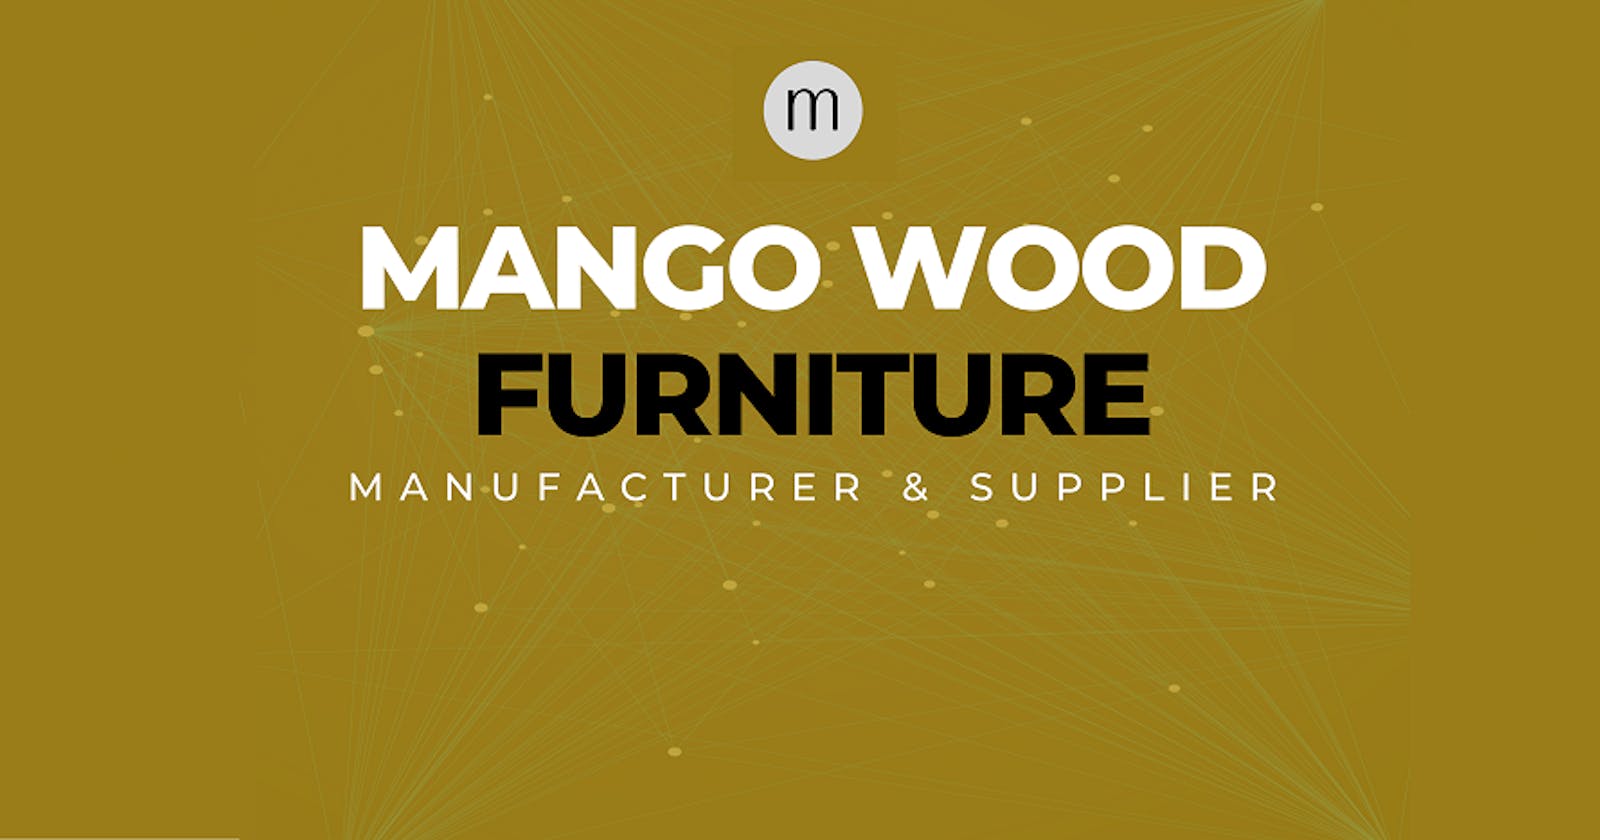 Mango Wood Furniture Wholesale Supplier in UK - Madhurs